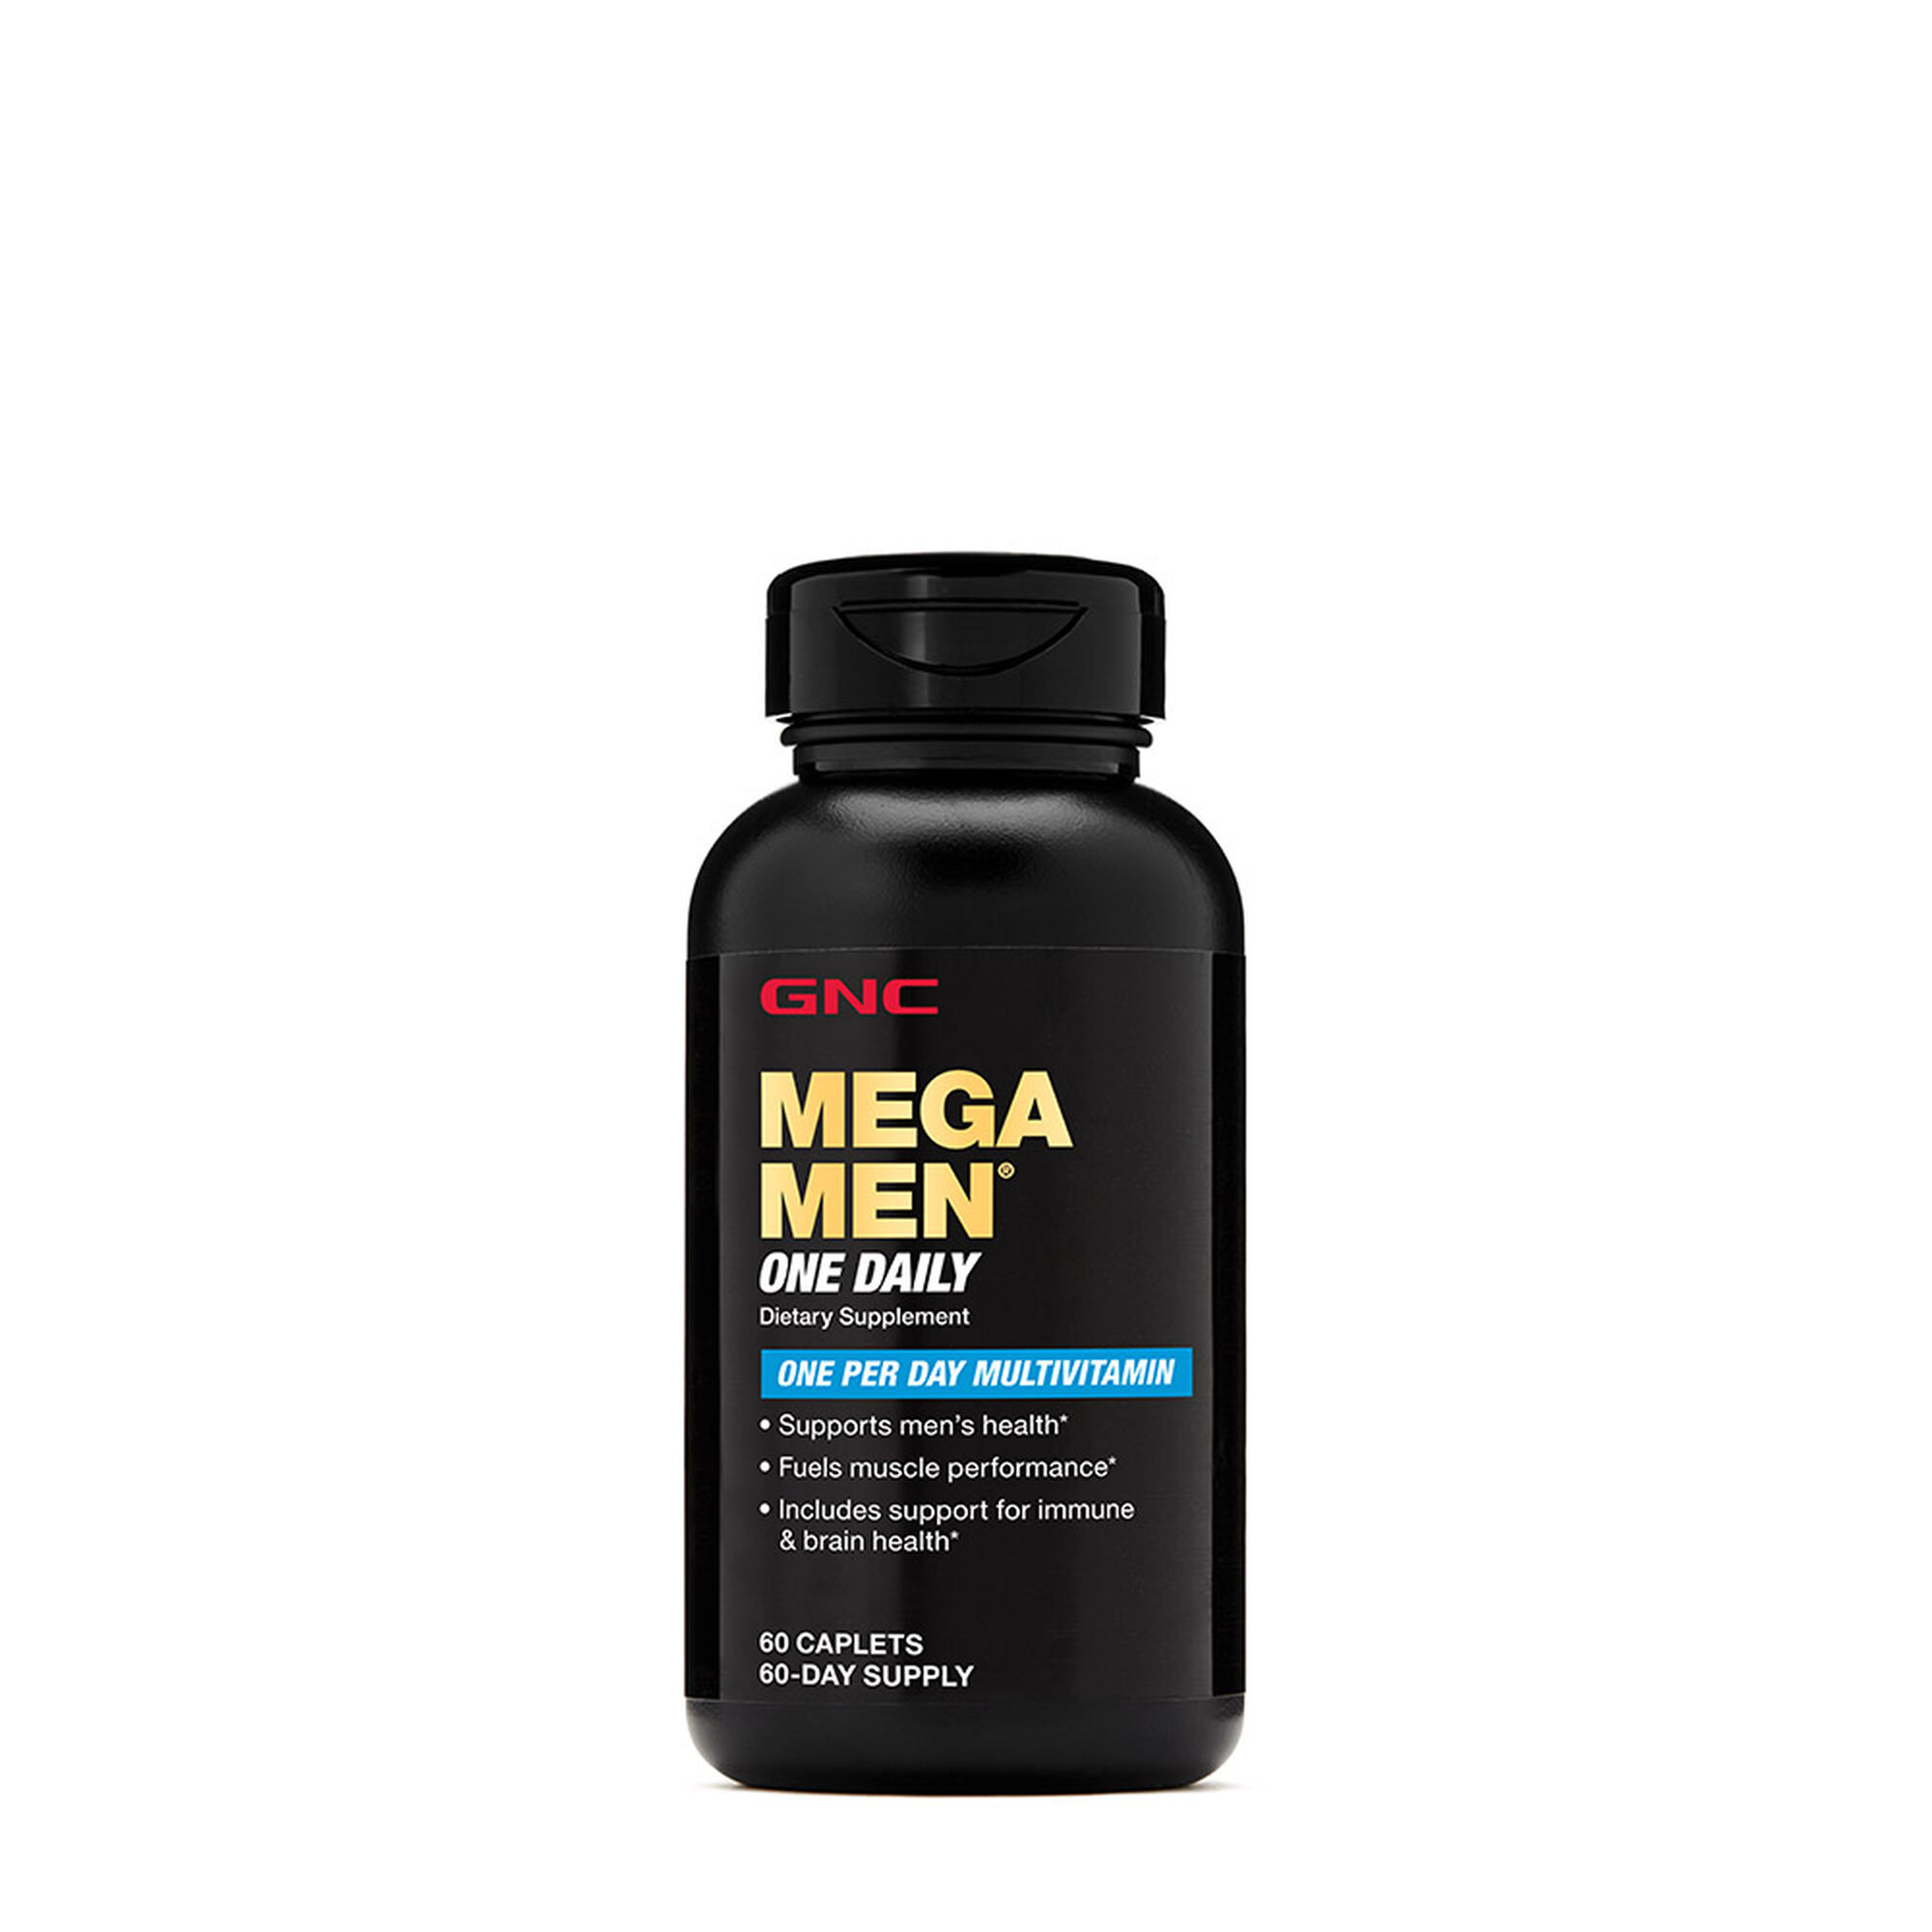 Витамины для мужчин 45. Quamtrax Mega Vitamins for men 60 таб. GNC Mega men Sport. Мультивитамины one Daily. Витамины американские для мужчин 50+.